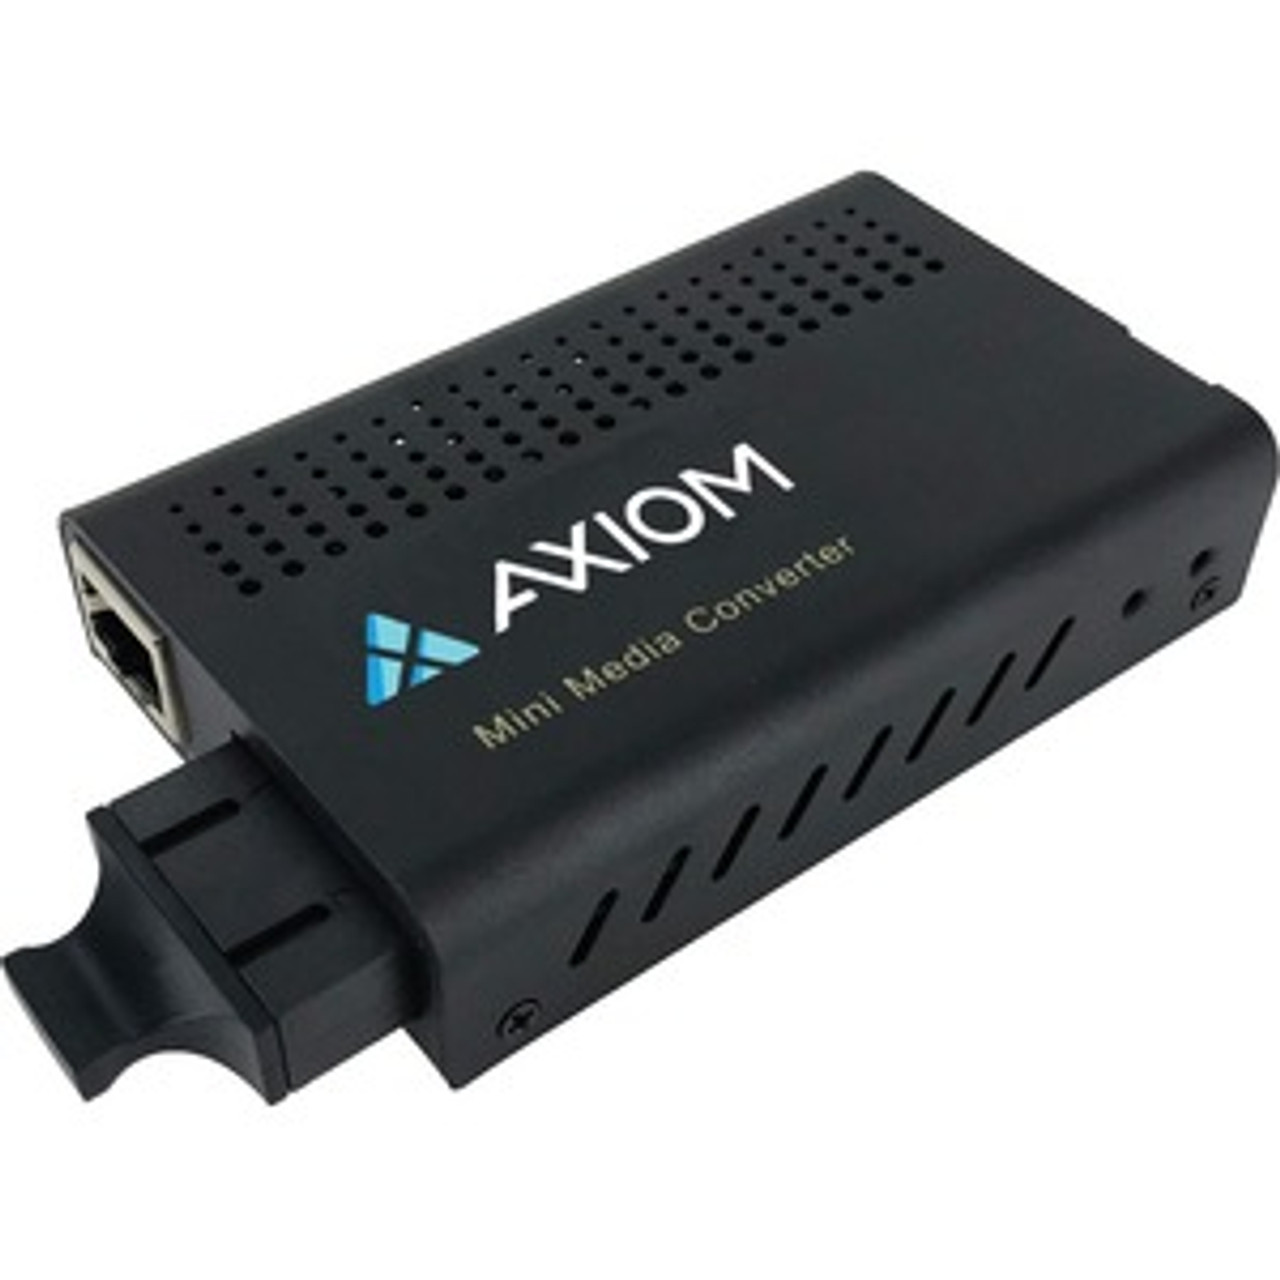 Axiom Mini 1000Base-T to 1000Base-LX Fiber SC Connector 1x Network RJ-45 1x SC Ports DuplexSC Port Single-mode Gigabit Ethernet 10/100/1000Base-T 1000Base-LX Media Converter Mfr P/N MC-2203-S3S20-AX